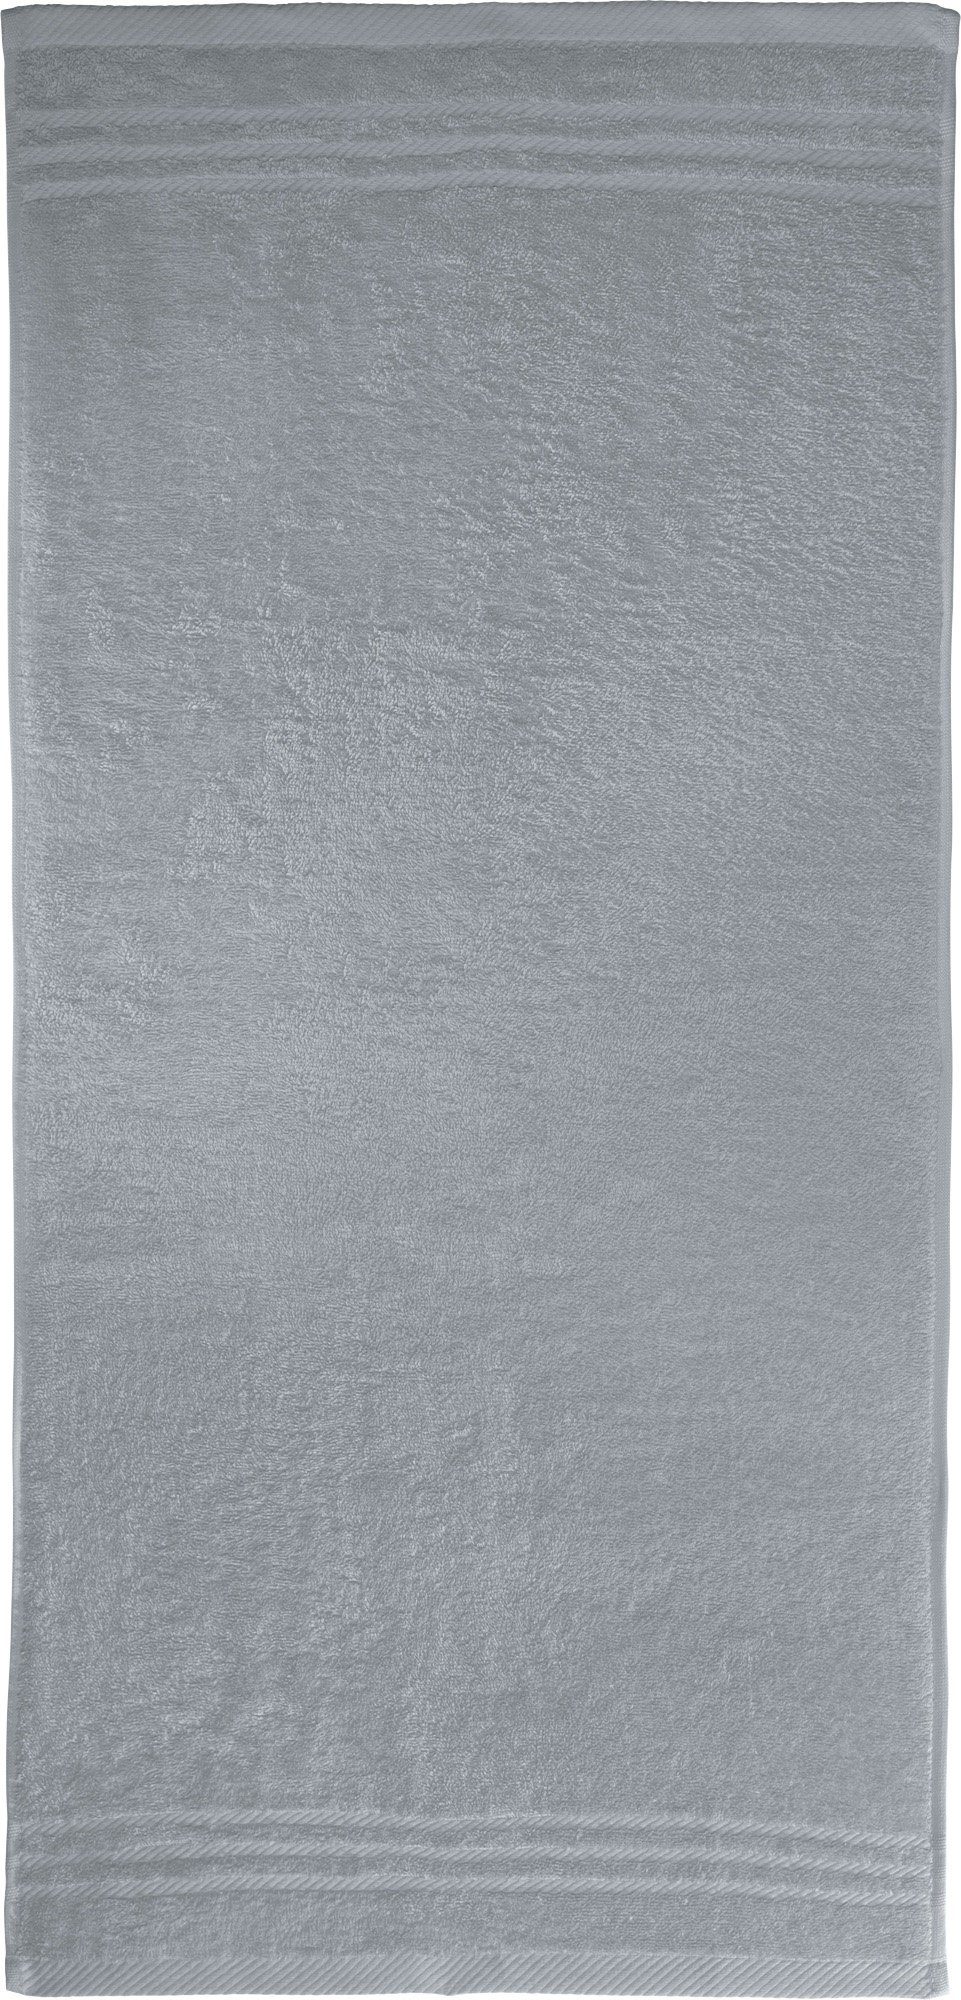 REDBEST Handtuch Handtuch, Frottier (1-St), Walk-Frottier Uni granit